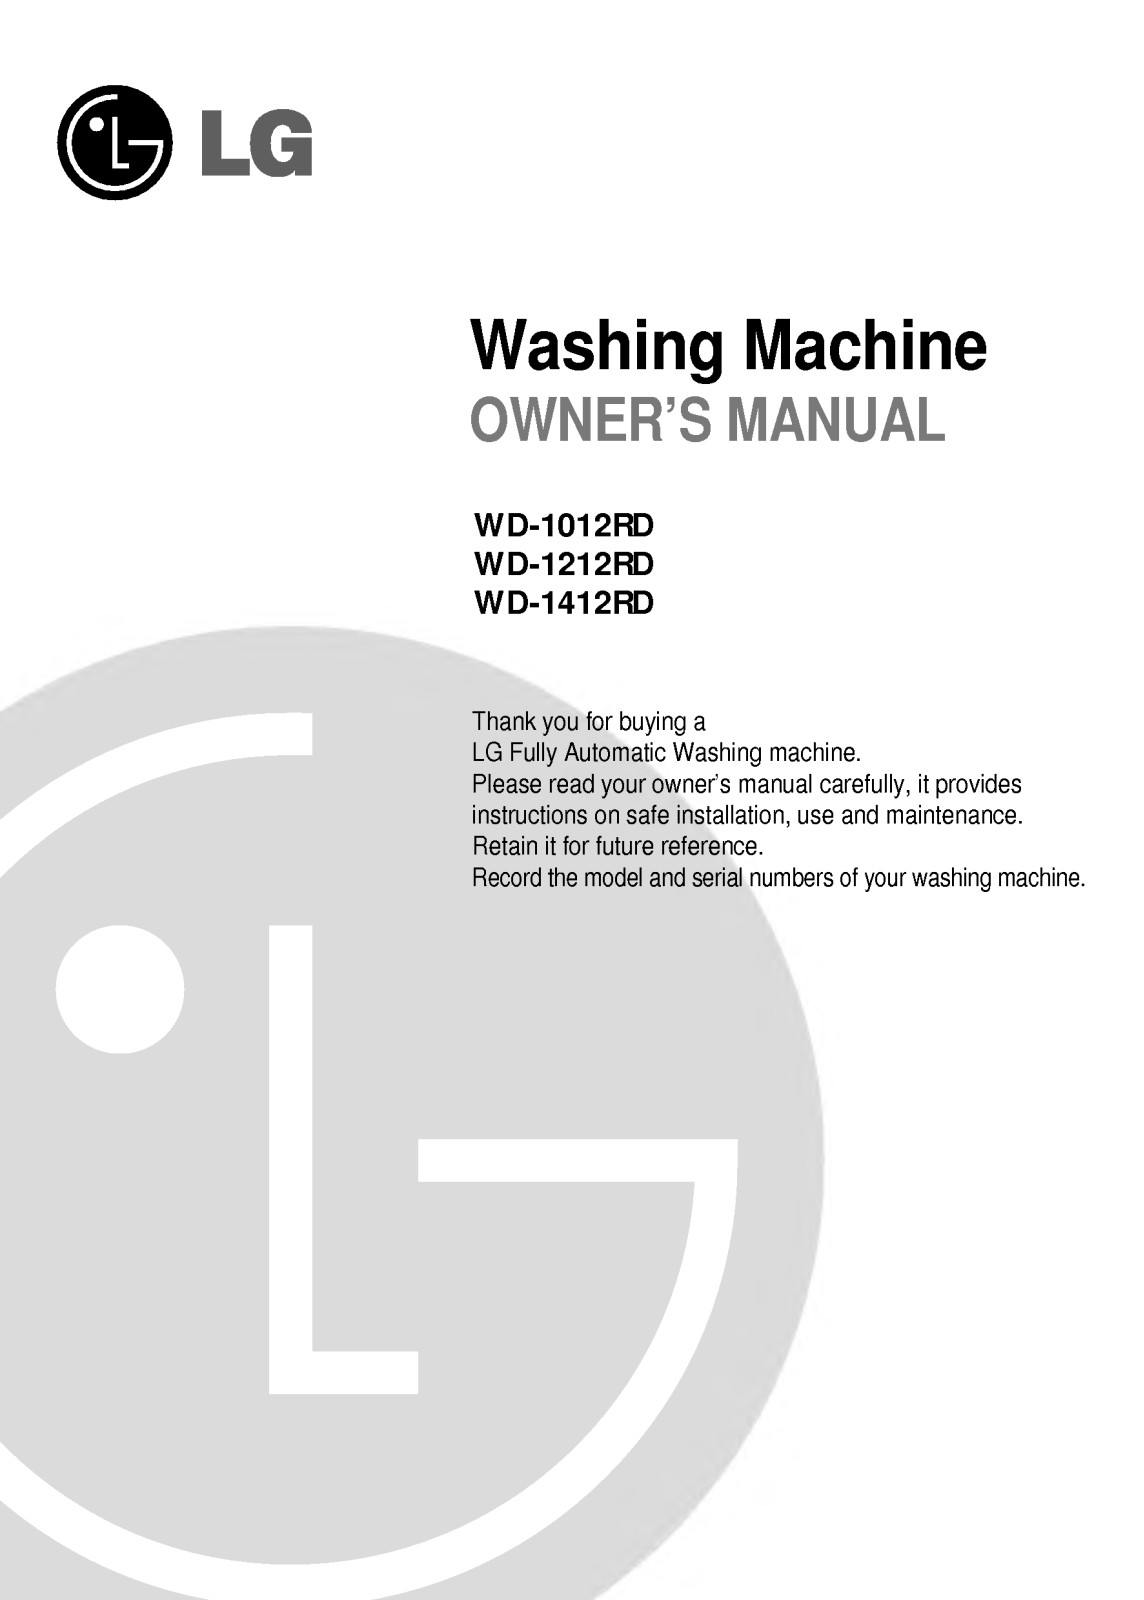 LG WD-1412RD User Manual